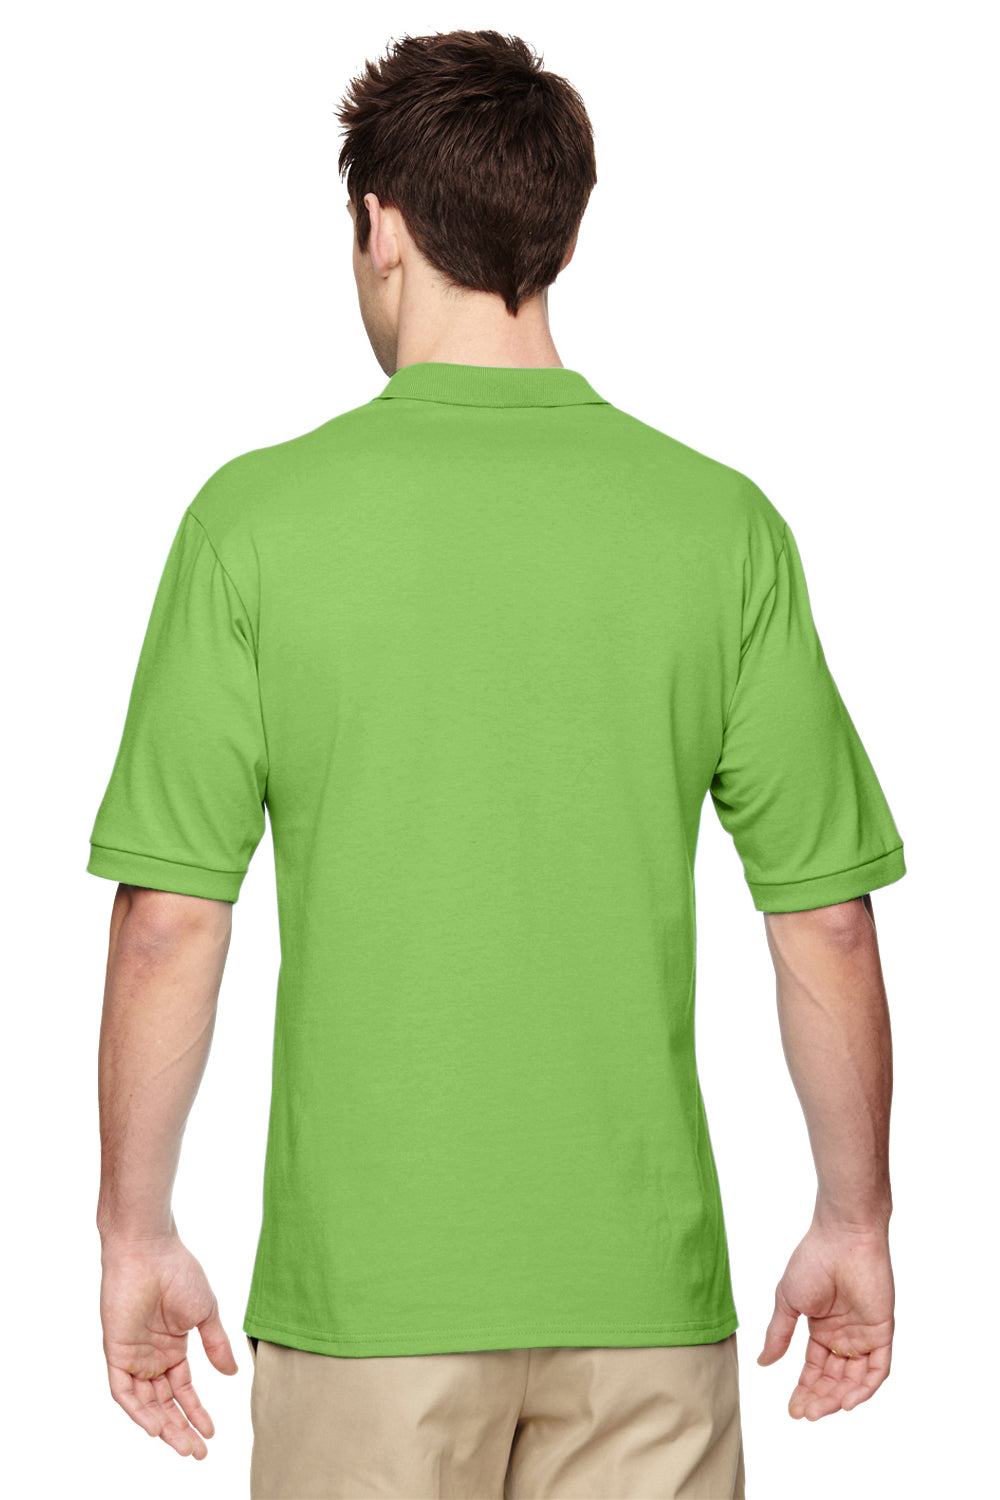 Jerzees 437 Mens SpotShield Stain Resistant Short Sleeve Polo Shirt Kiwi Green Back